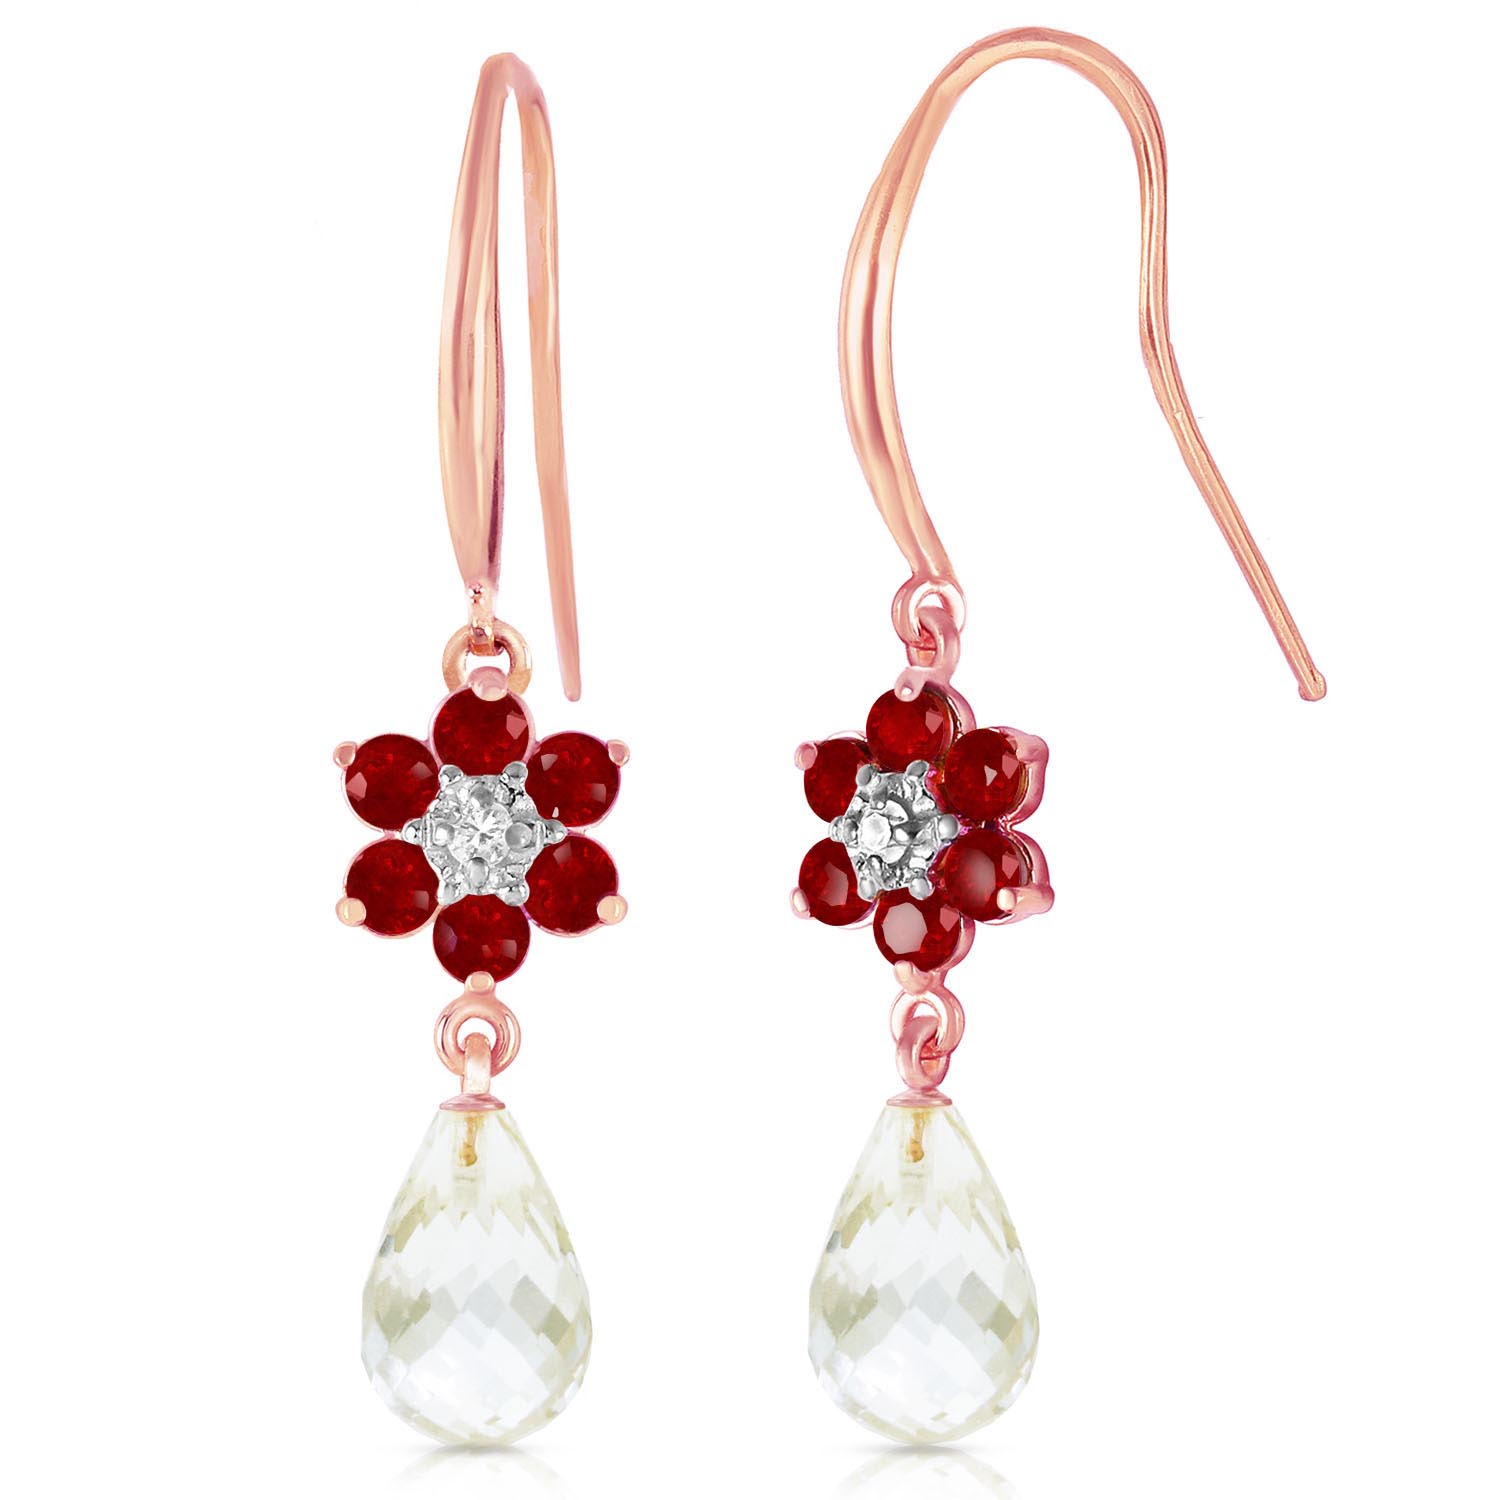 White Topaz, Diamond & Ruby Daisy Chain Drop Earrings in 9ct Rose Gold